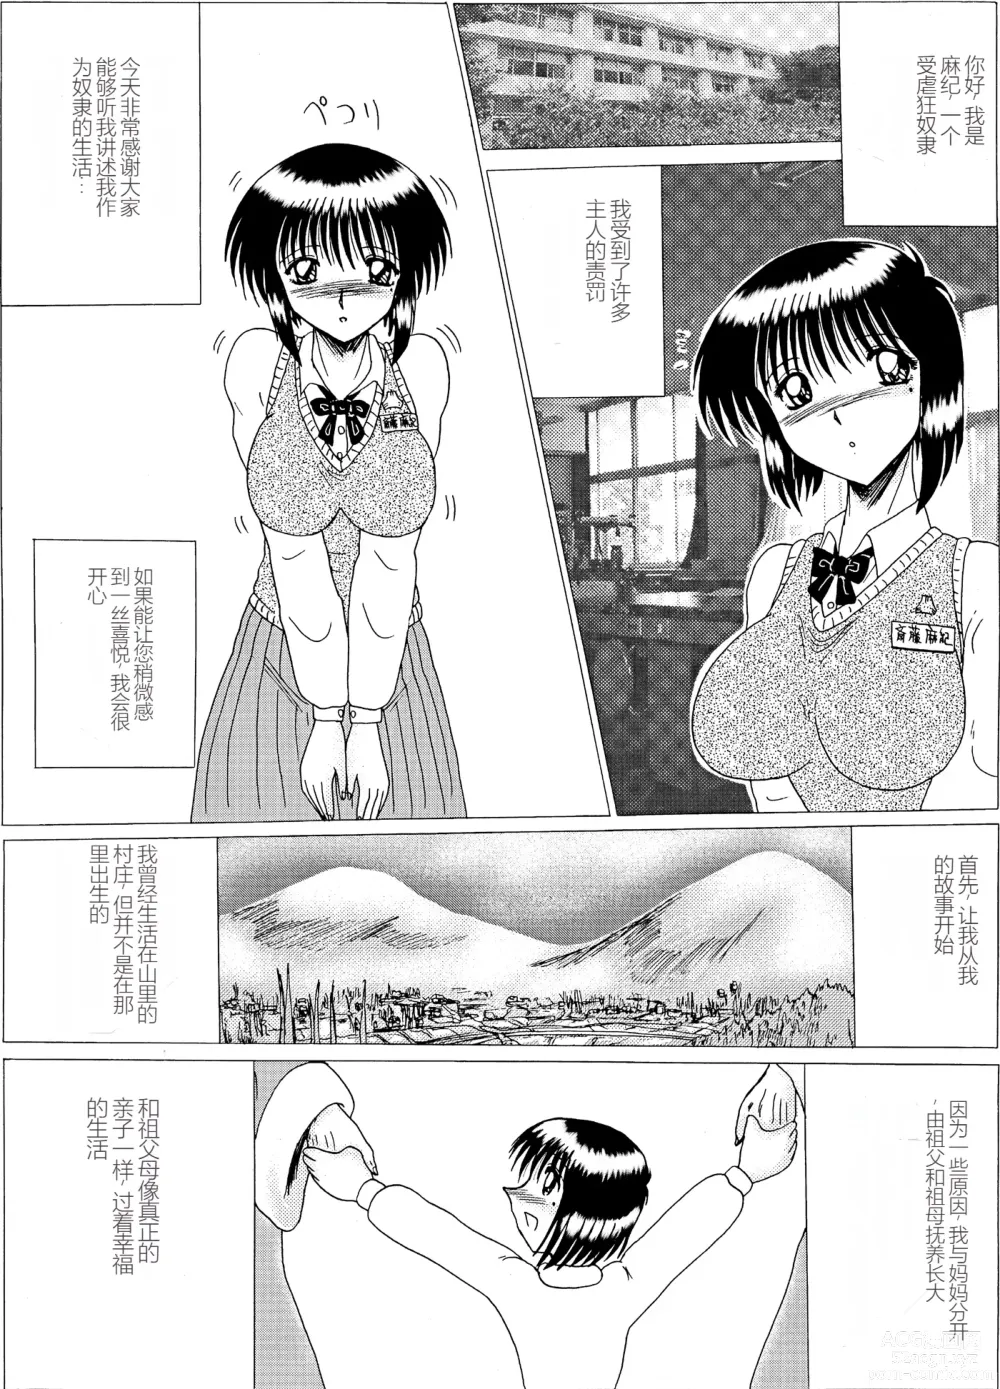 Page 3 of manga Mazo Dorei Maki -Maki to Mazo Doreitachi-